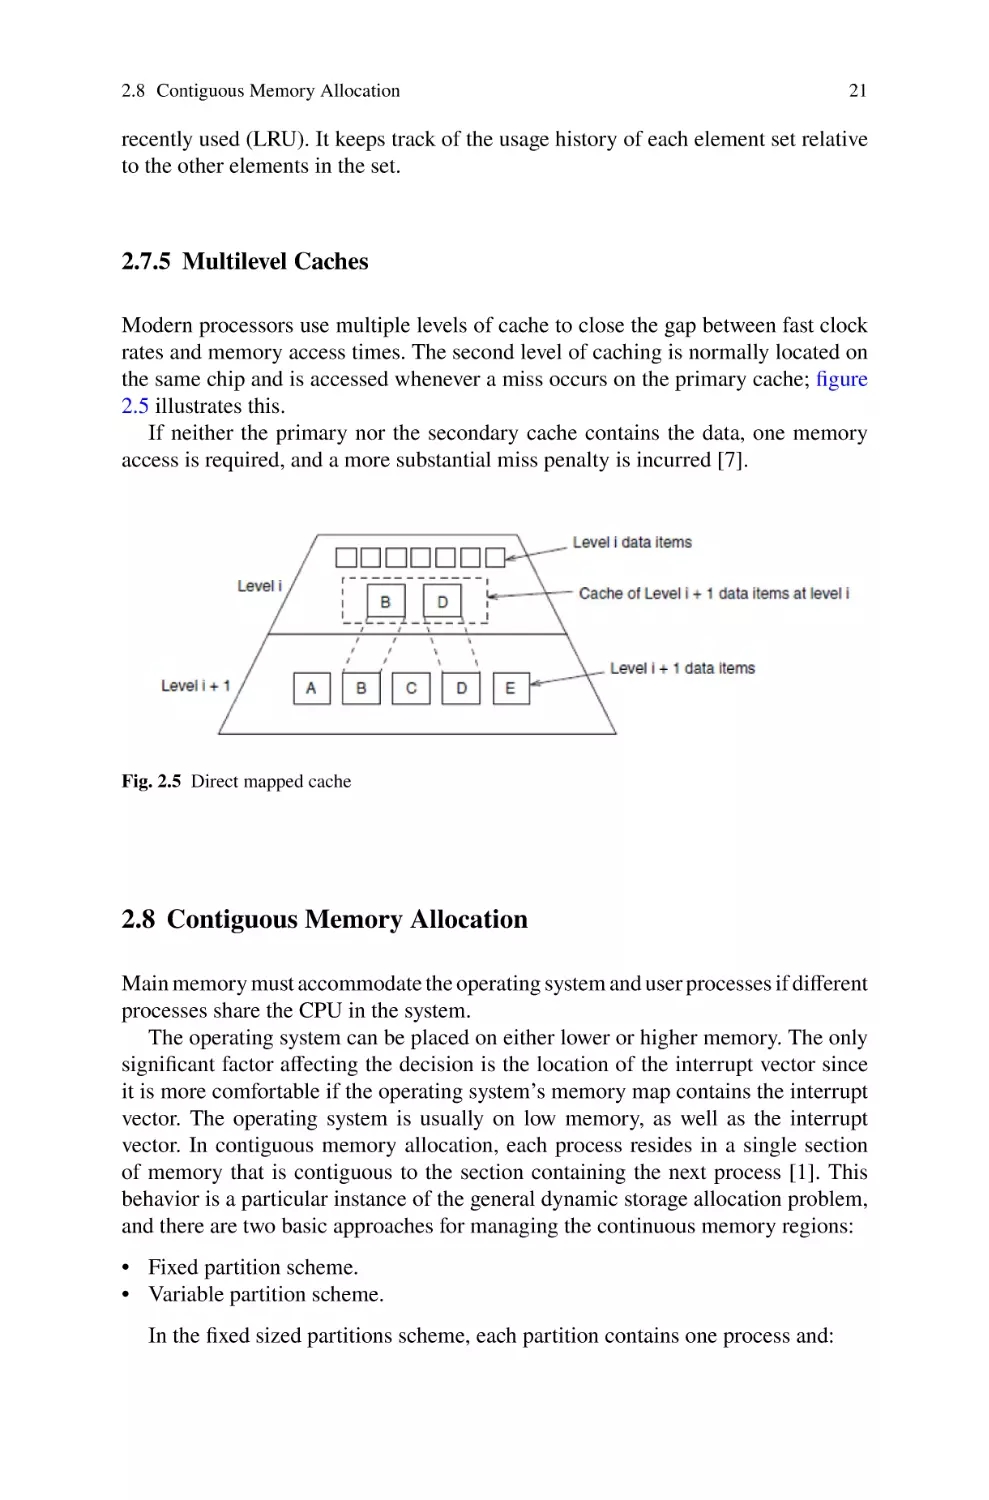 2.7.5 Multilevel Caches
2.8 Contiguous Memory Allocation